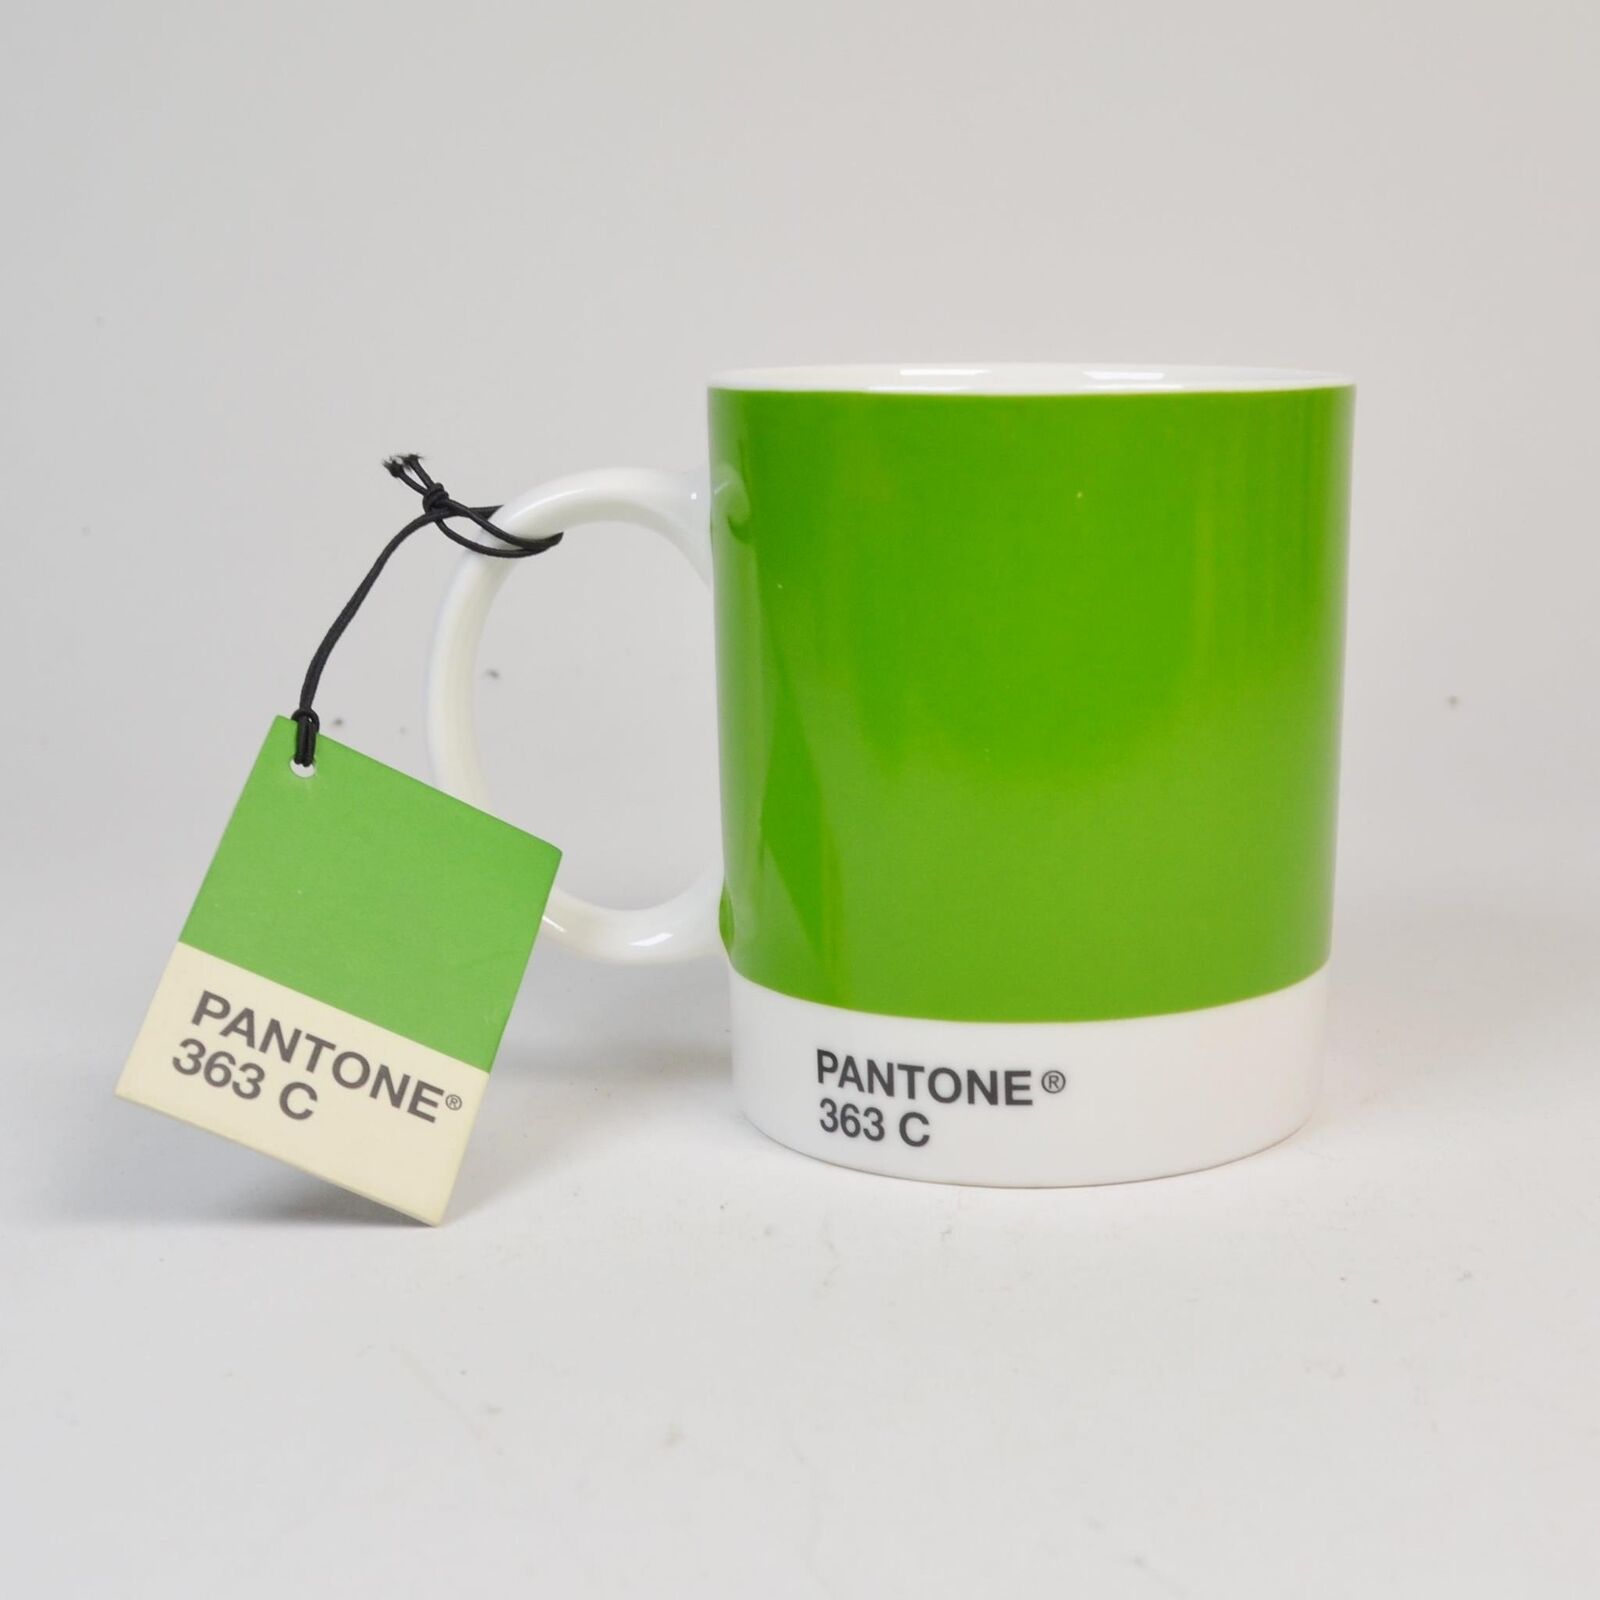 Pantone Coffee Mug - 363 C - Pea Green - Tree Frog Green, Astro Turf - Factory S